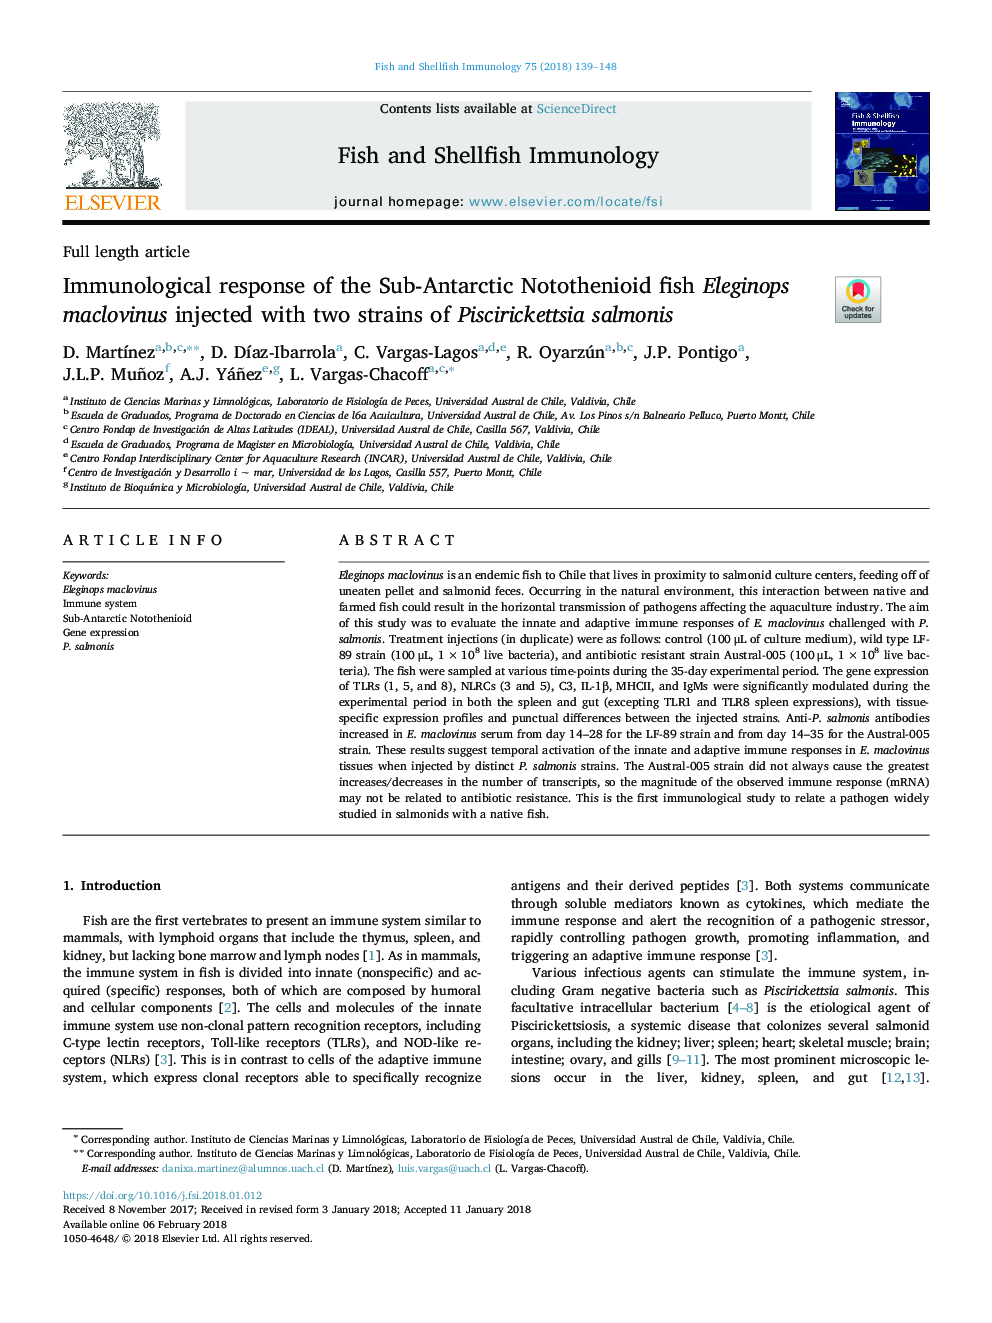 Immunological response of the Sub-Antarctic Notothenioid fish Eleginops maclovinus injected with two strains of Piscirickettsia salmonis